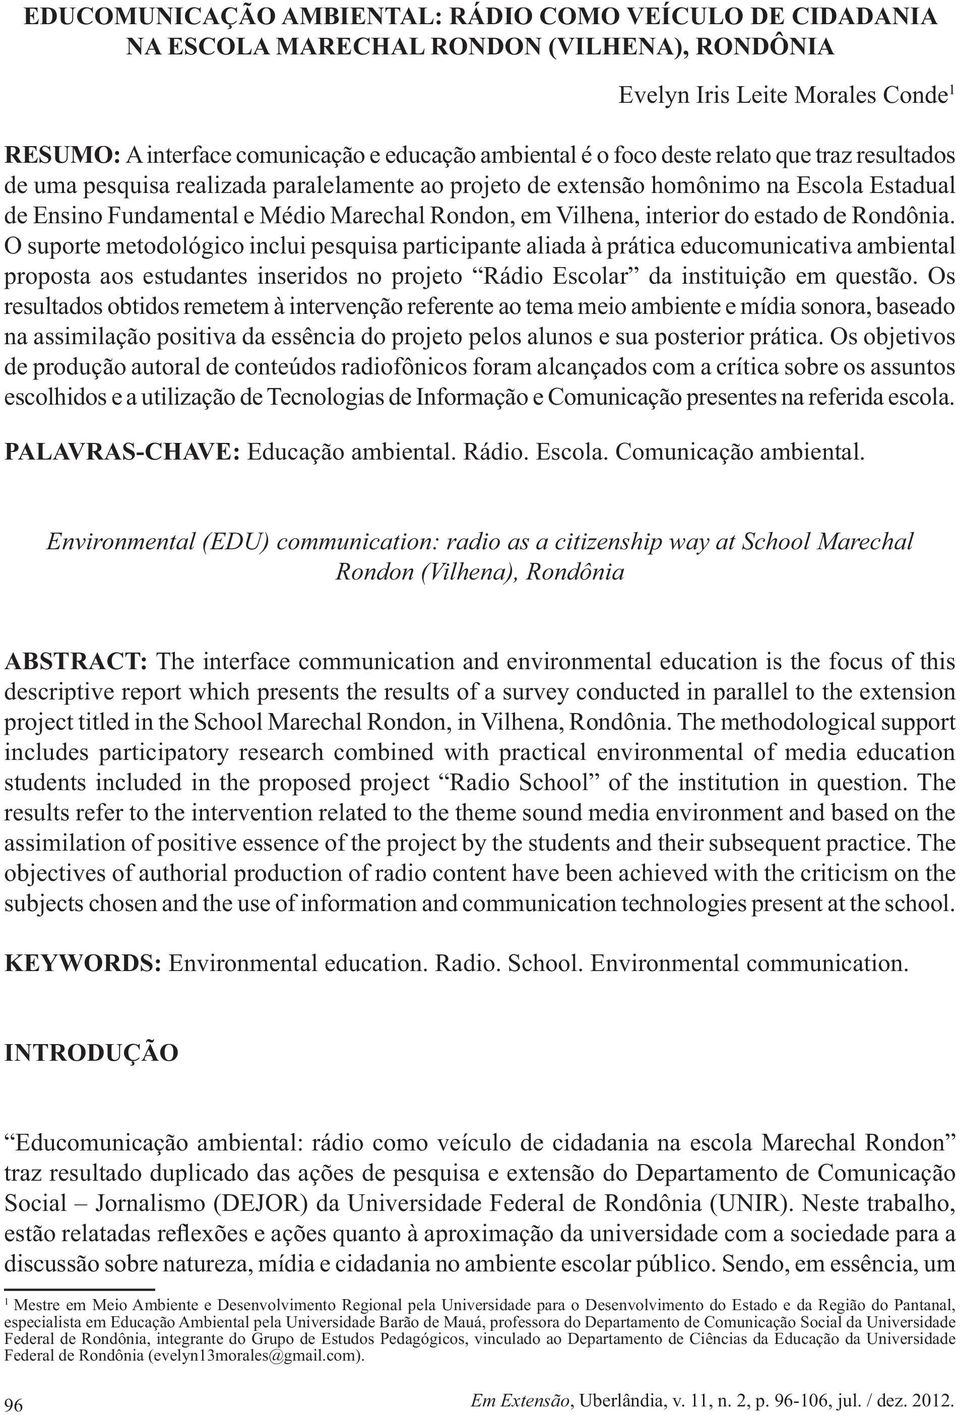 Environmental (EDU) communication: radio as a citizenship way at